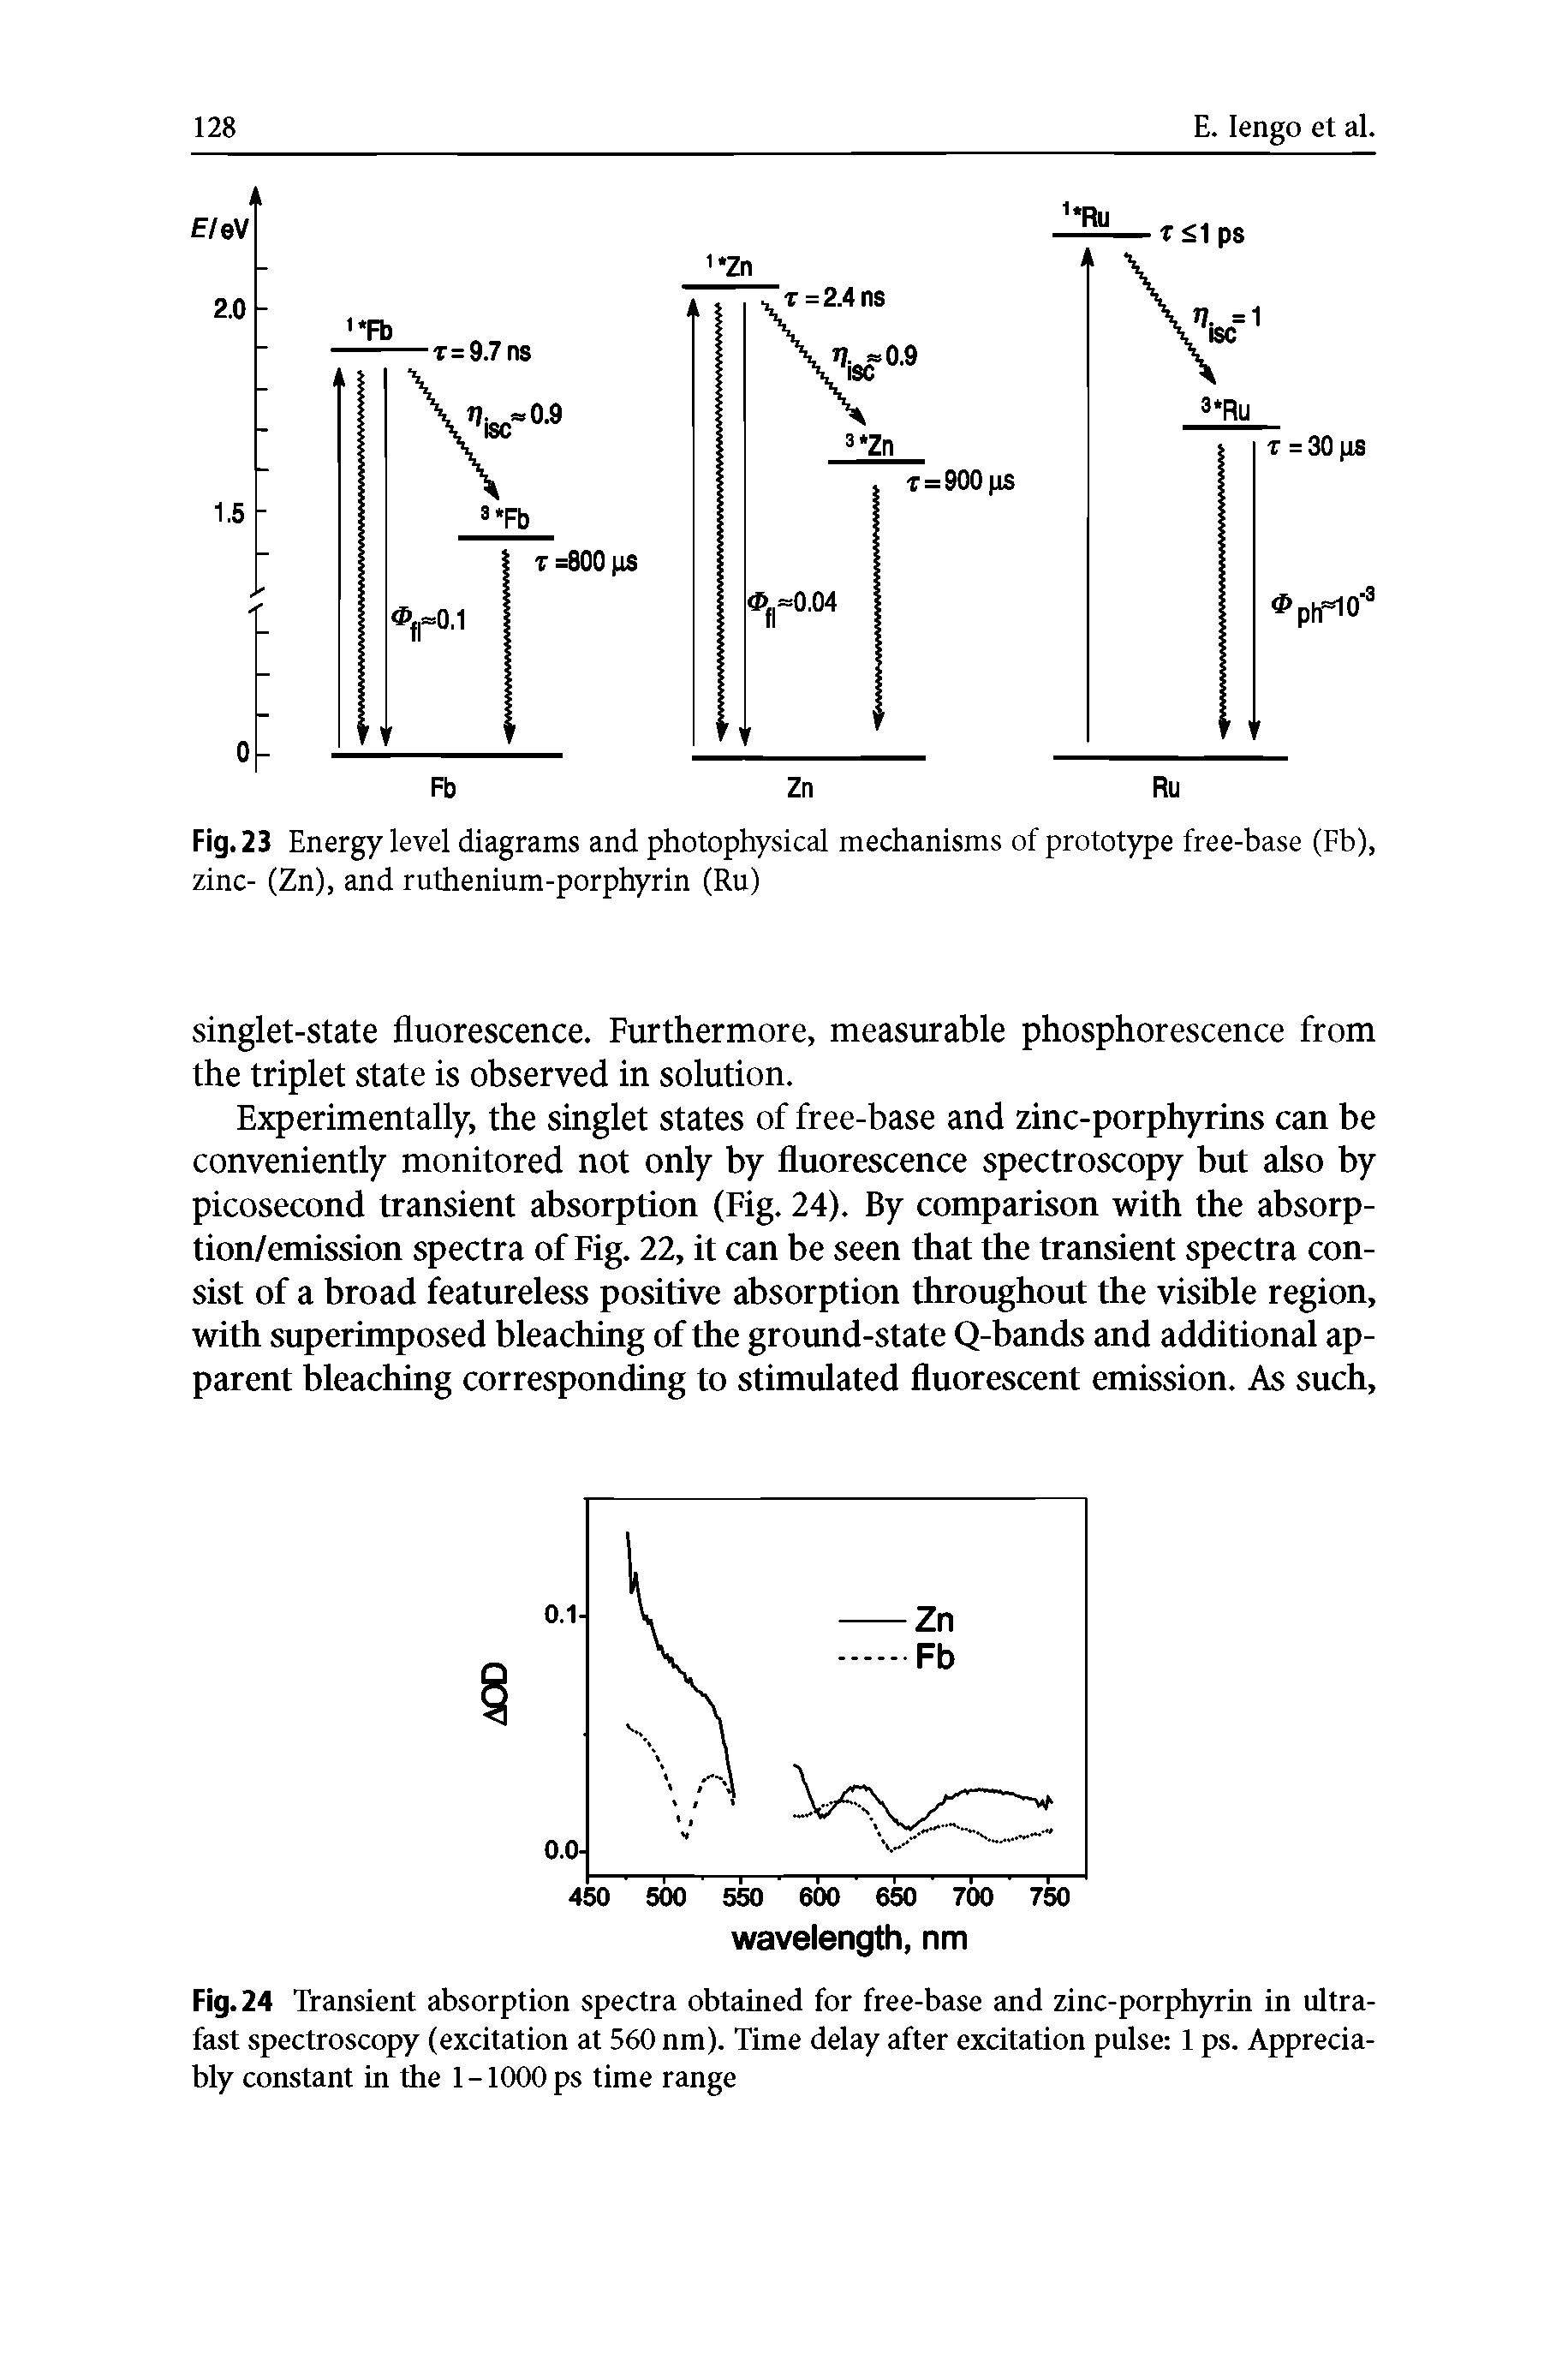 Fig.23 Energy level diagrams and photophysical mechanisms of prototype free-base (Fb), zinc- (Zn), and ruthenium-porphyrin (Ru)...